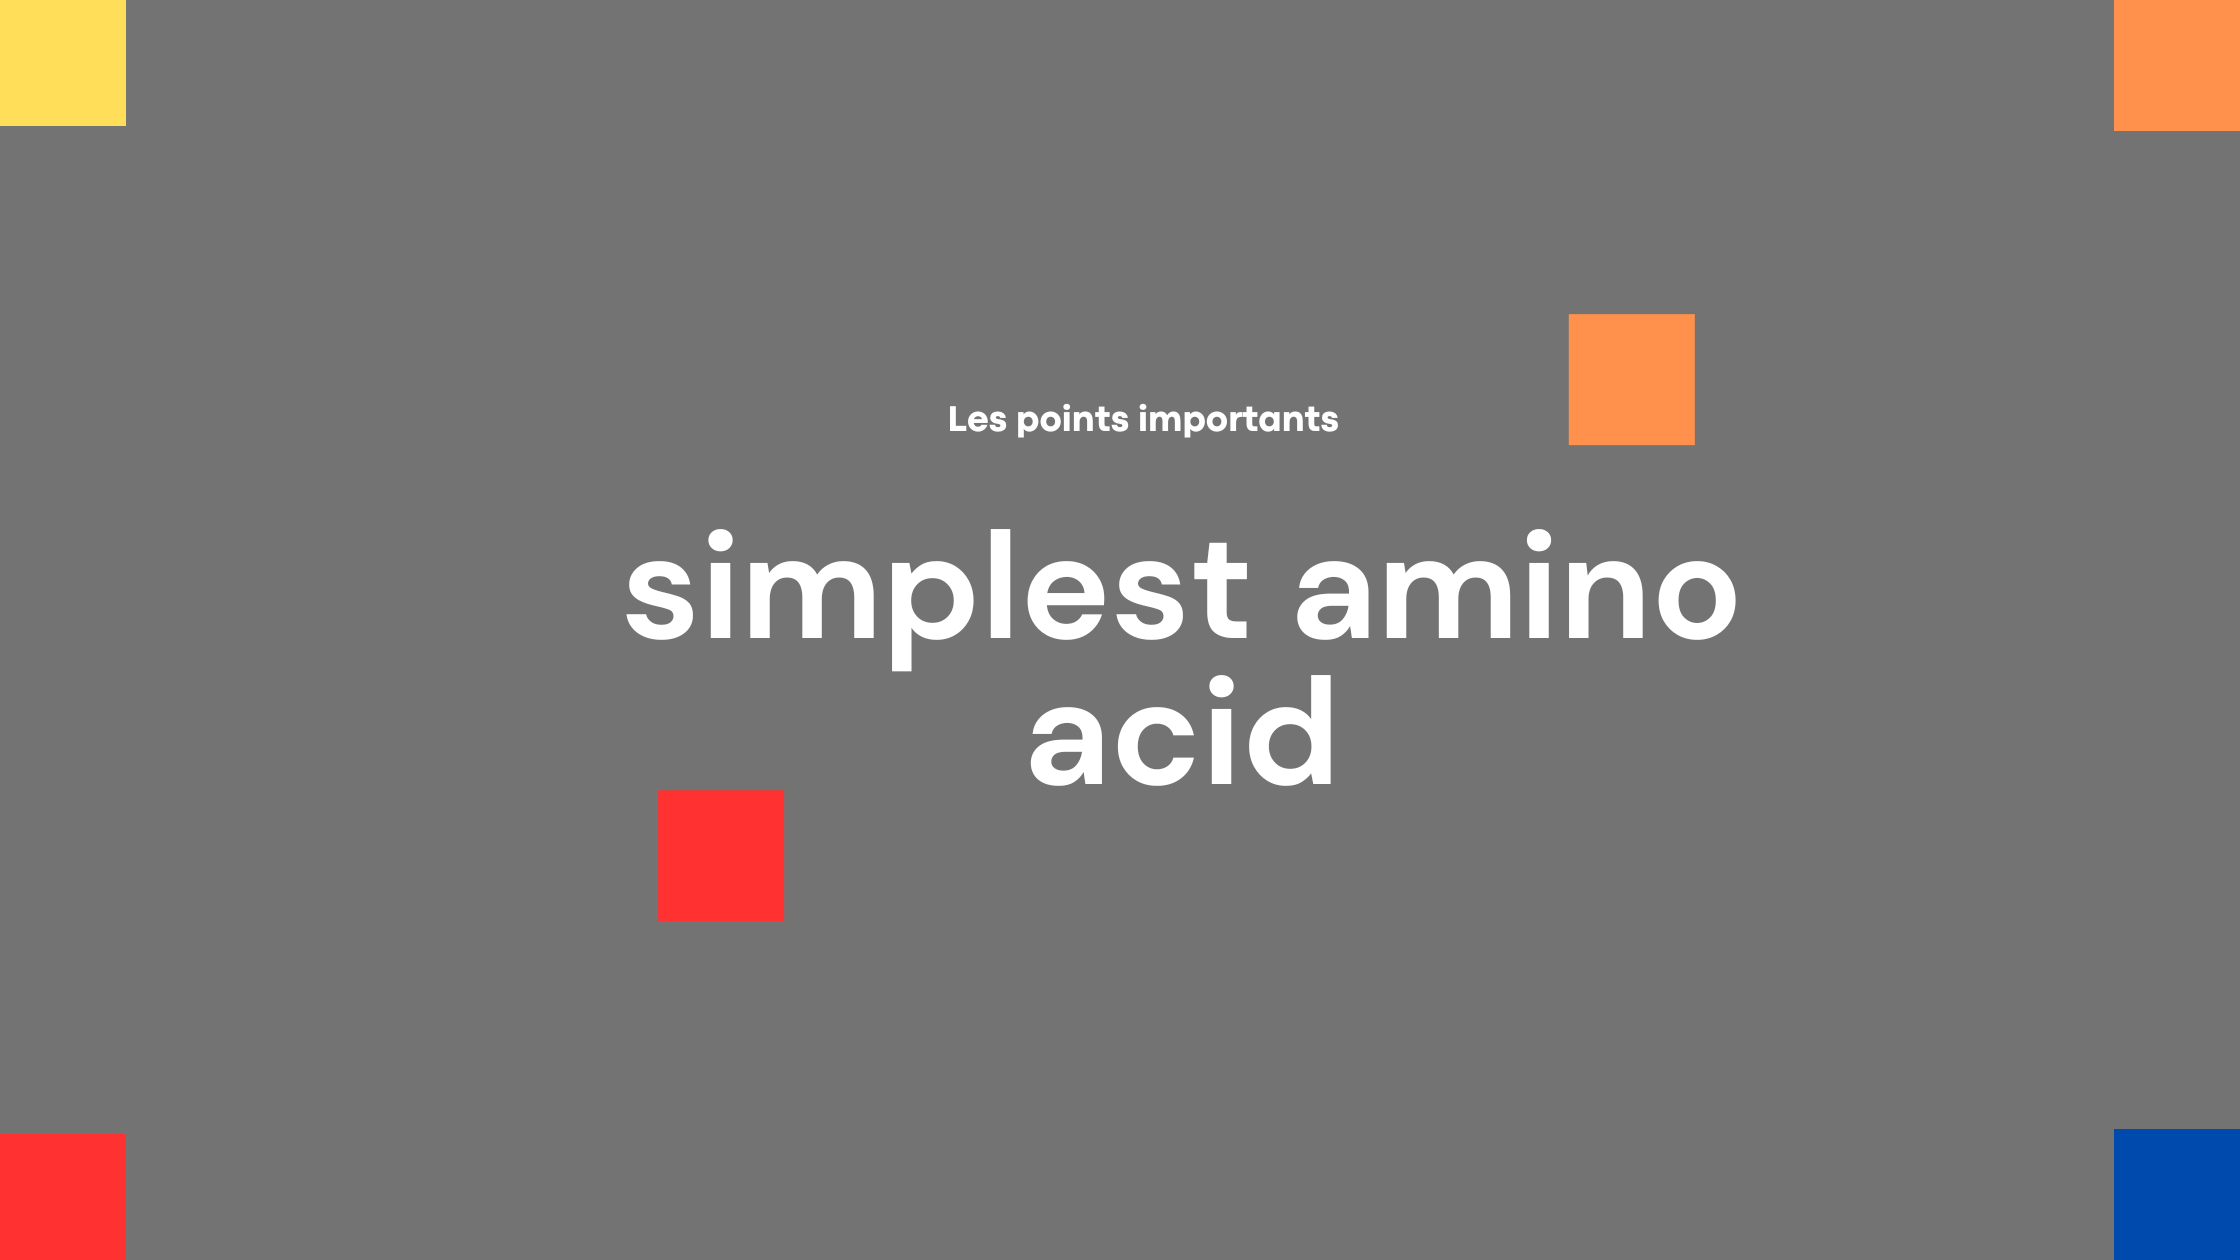 simplest amino acid | Les points importants